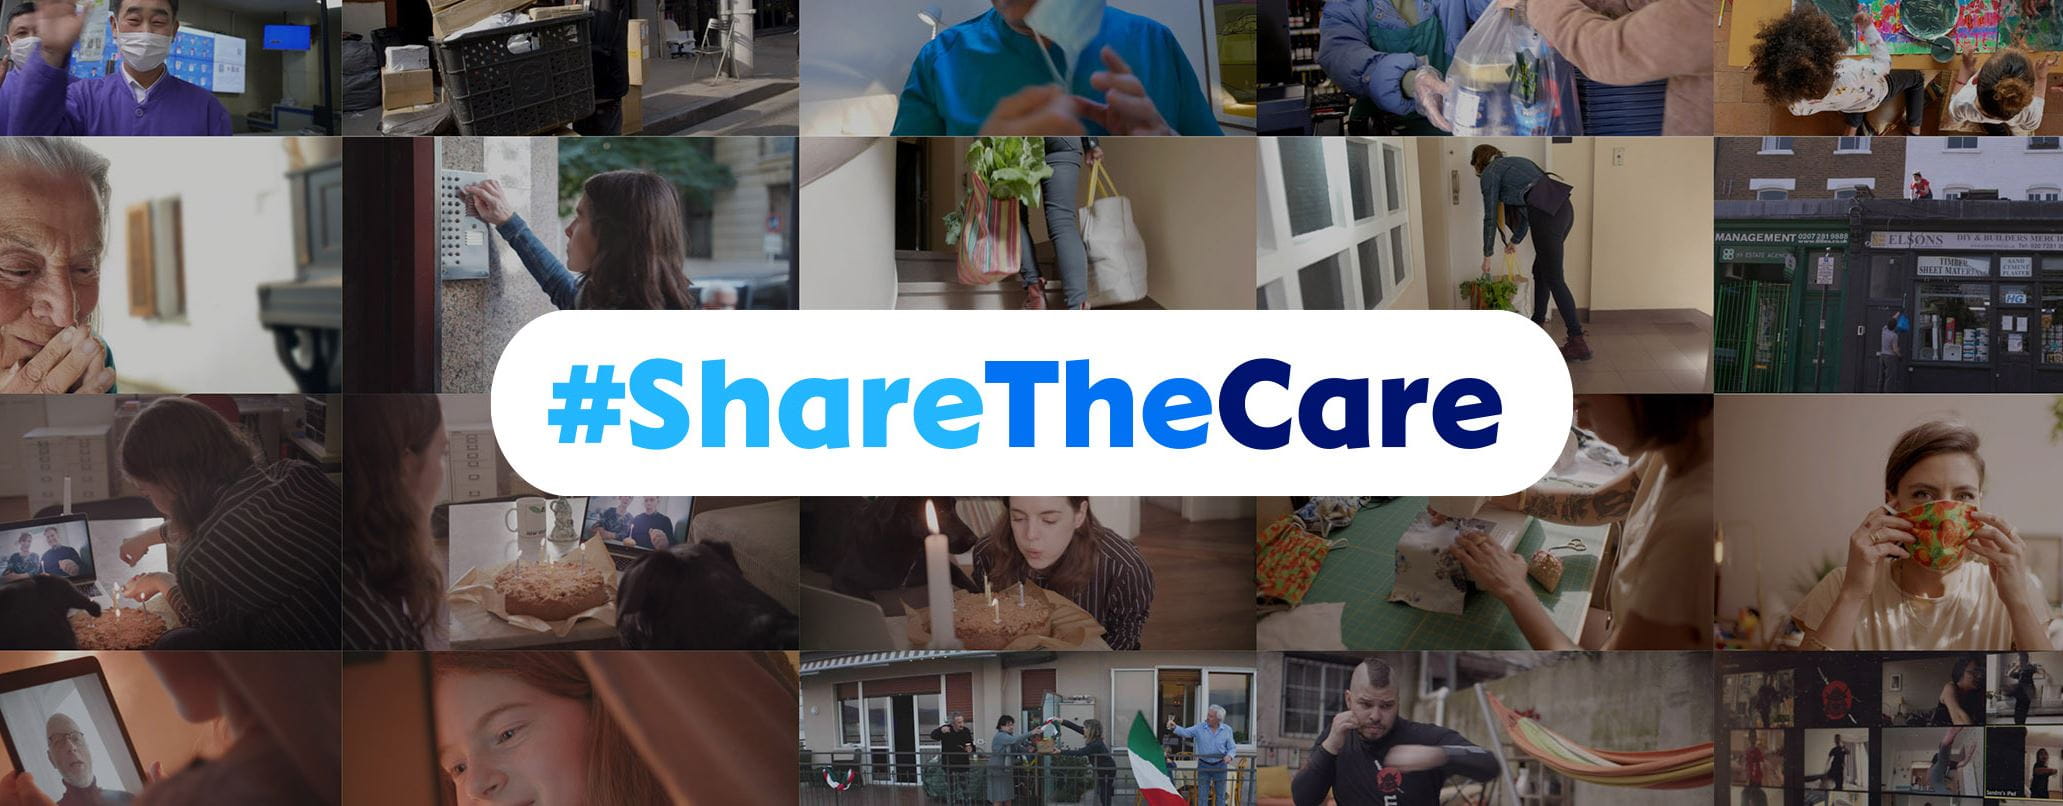 #sharethecare collage photos 